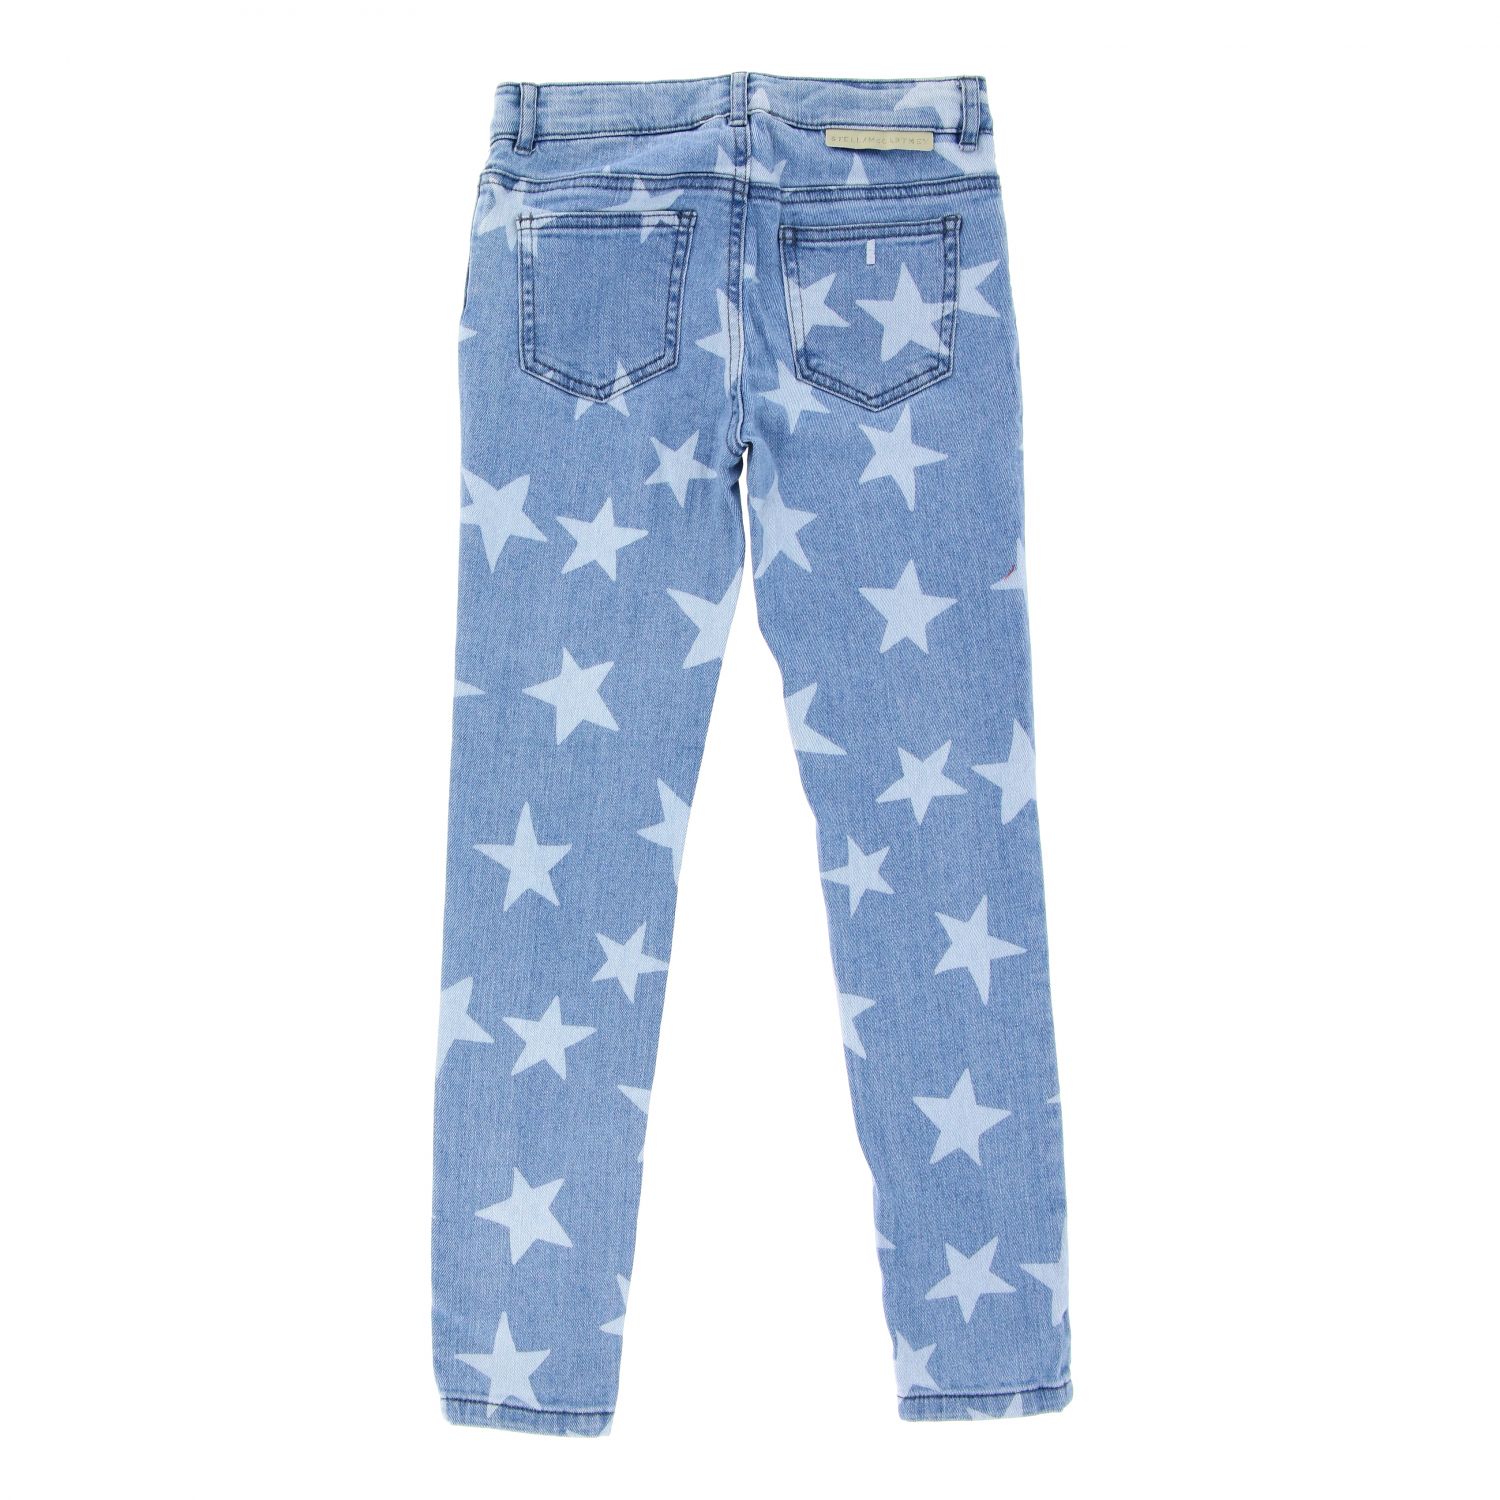 Stella Mccartney Outlet: Slim jeans with star print - Denim | Jeans ...